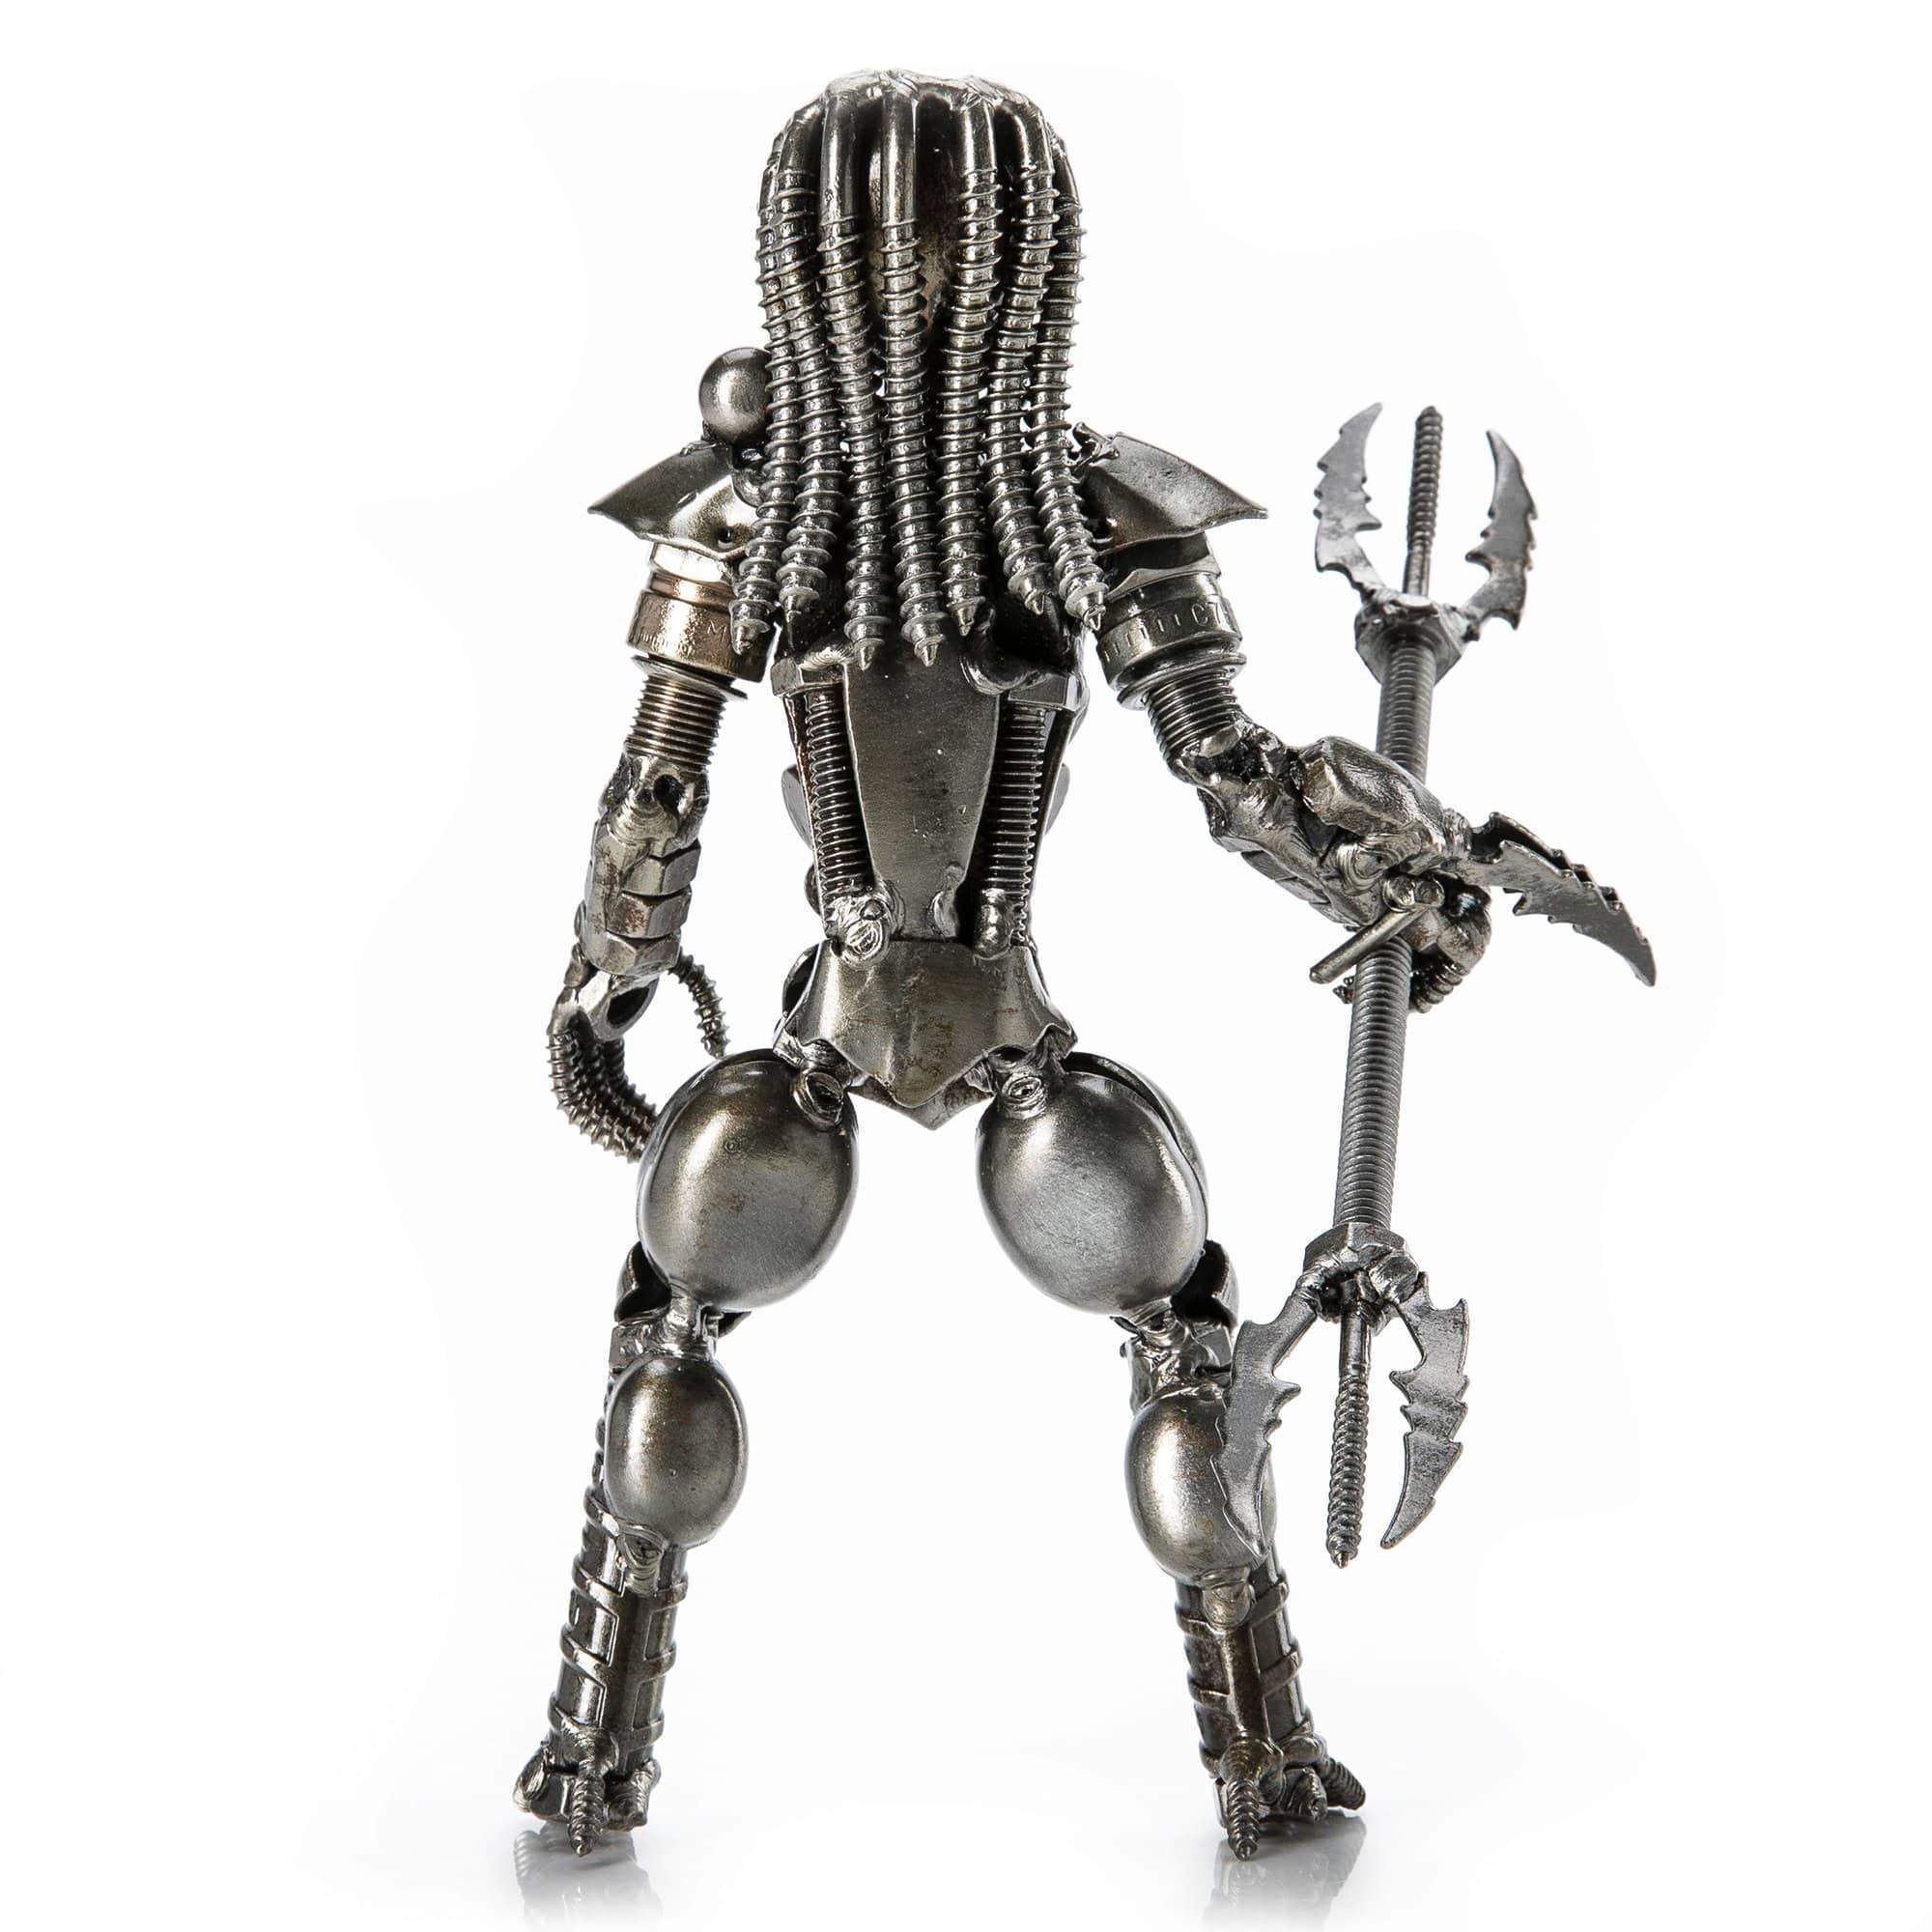 Kalifano Recycled Metal Art Predator Inspired Recycled Metal Sculpture RMS-350PN-N